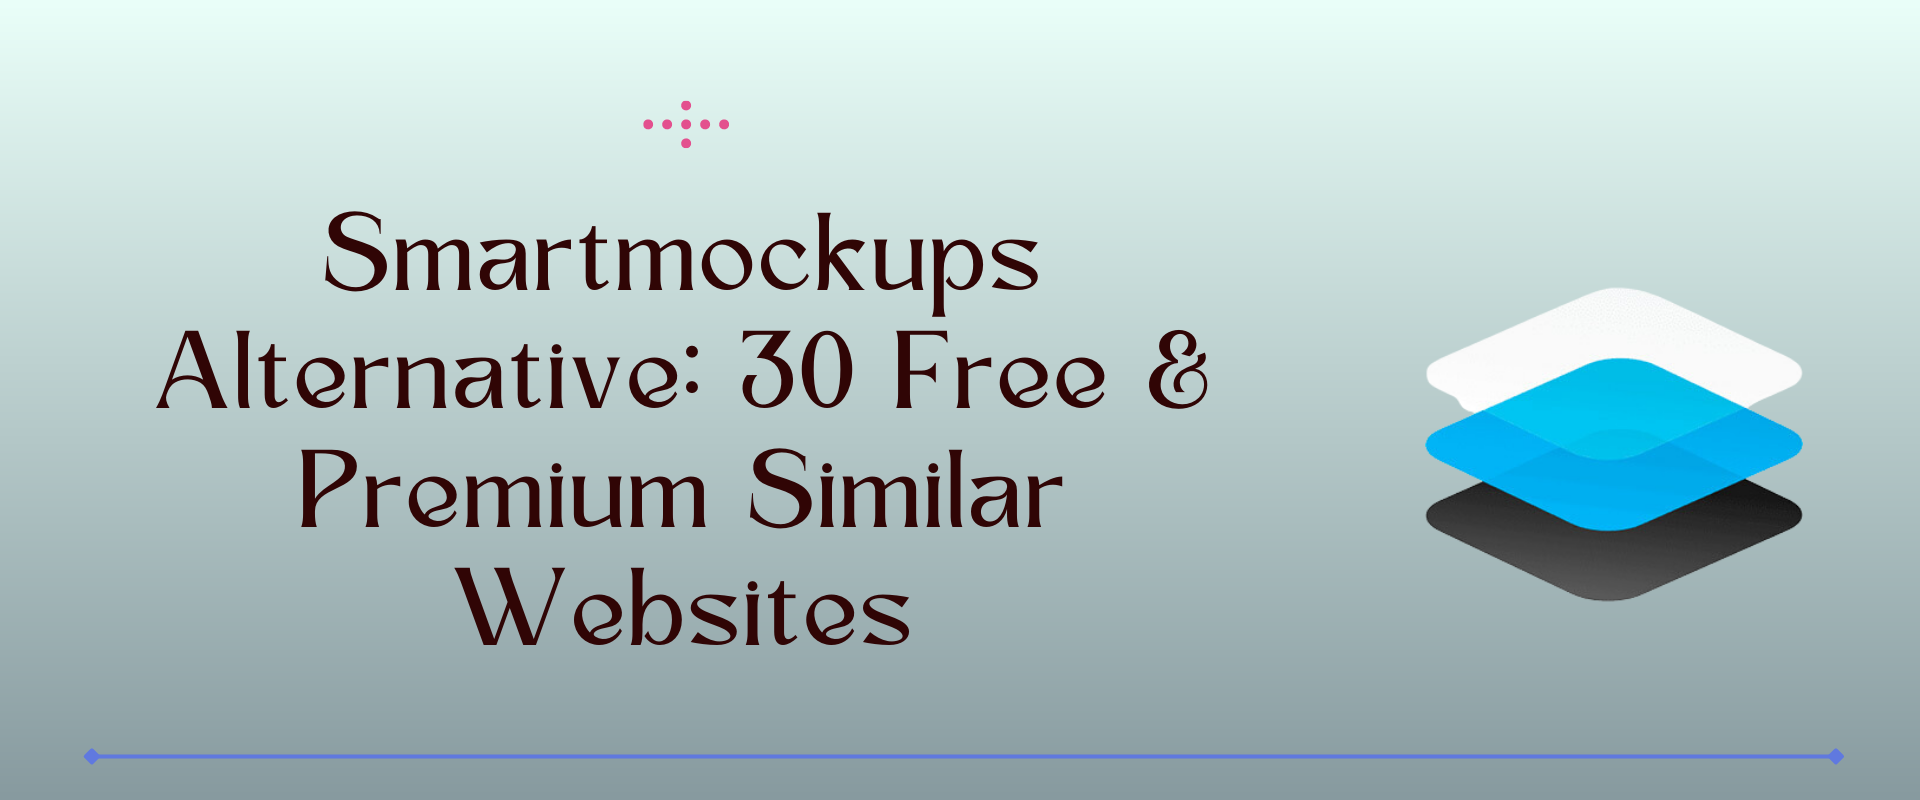 Smartmockups Alternative: 30 Free & Premium Similar Websites